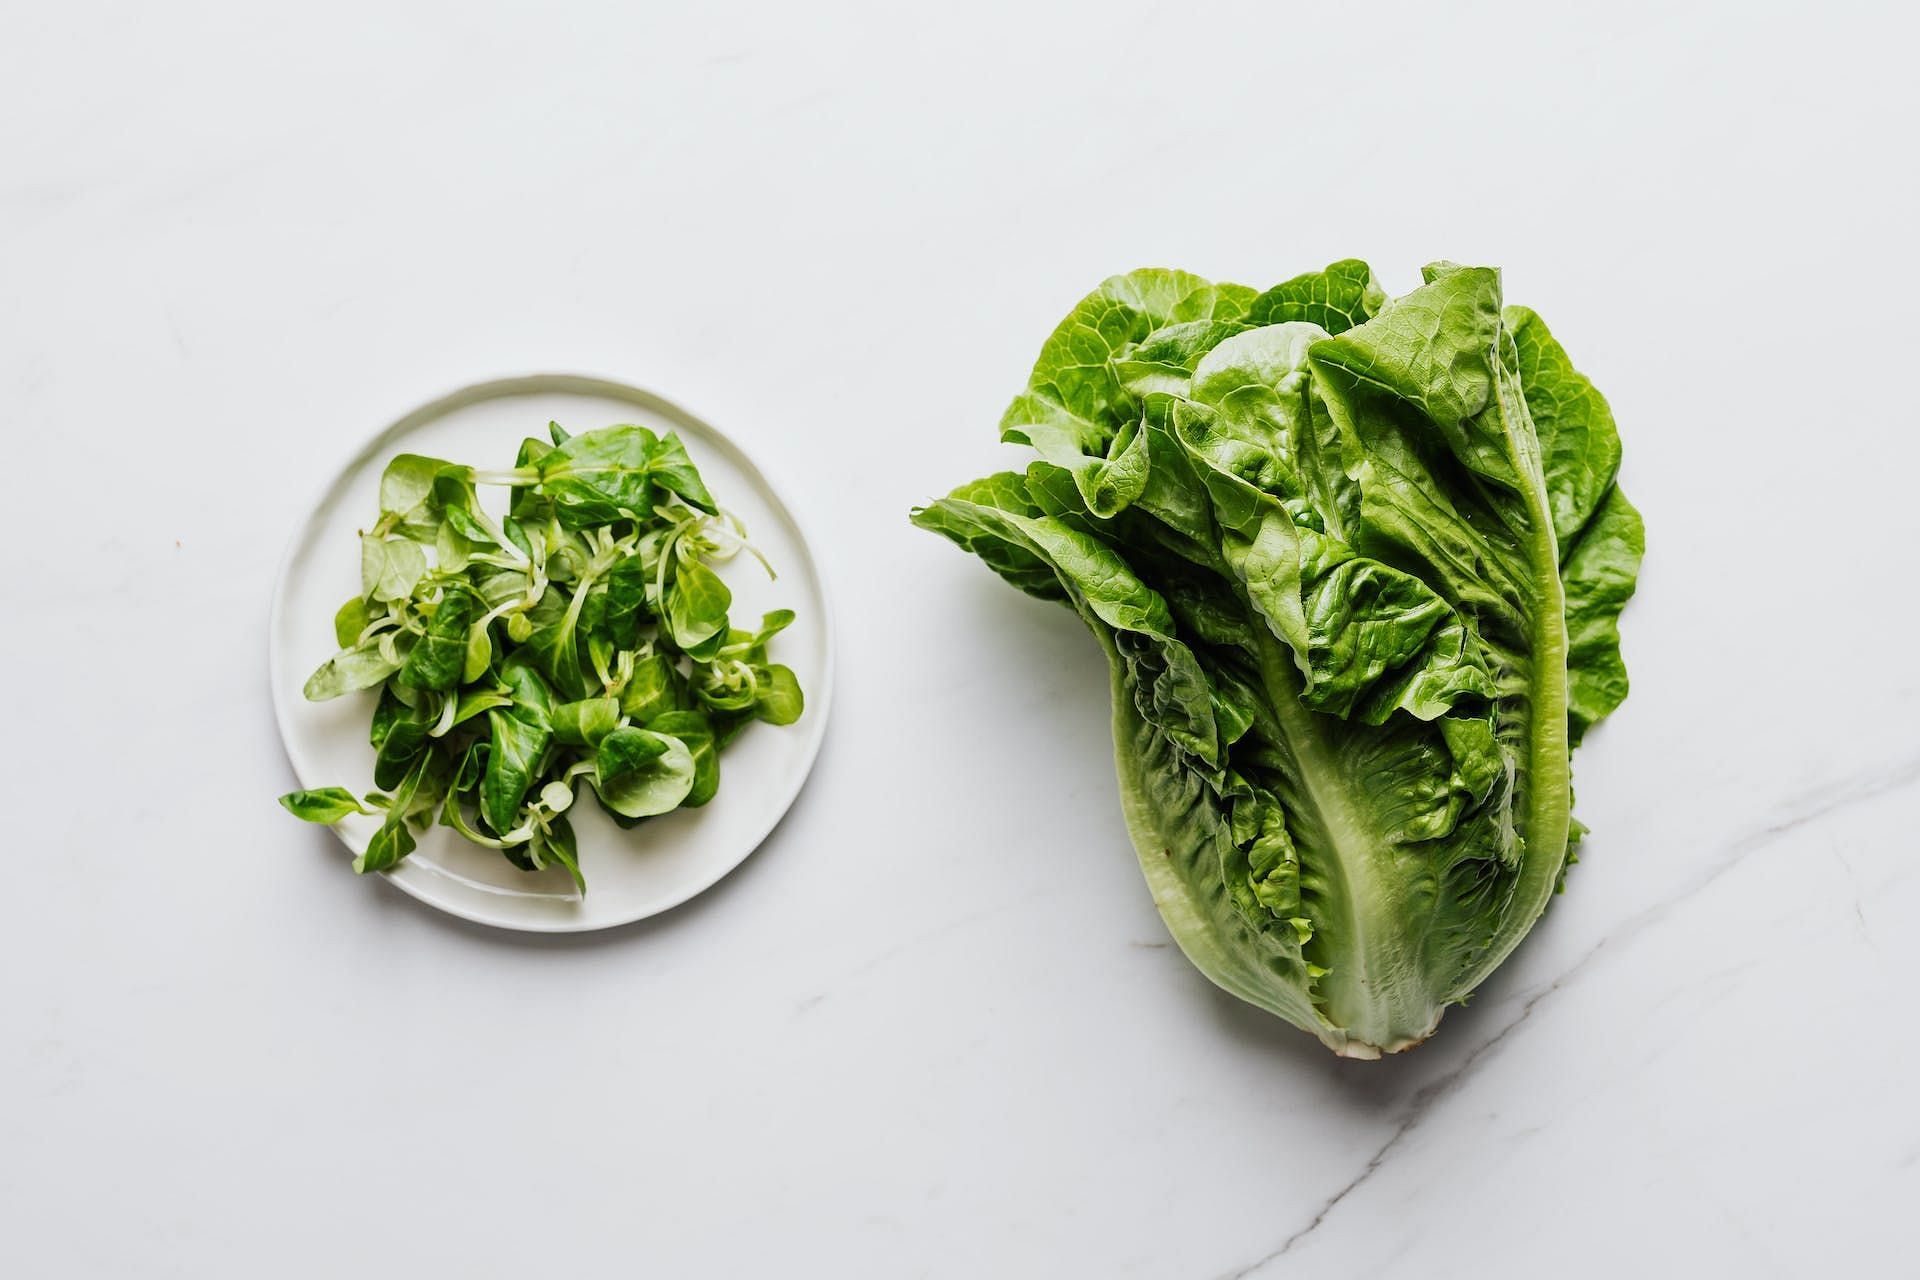 Green leafy veggies should be added to a PCOS diet. (Image via Pexels/Karolina Grabowska)